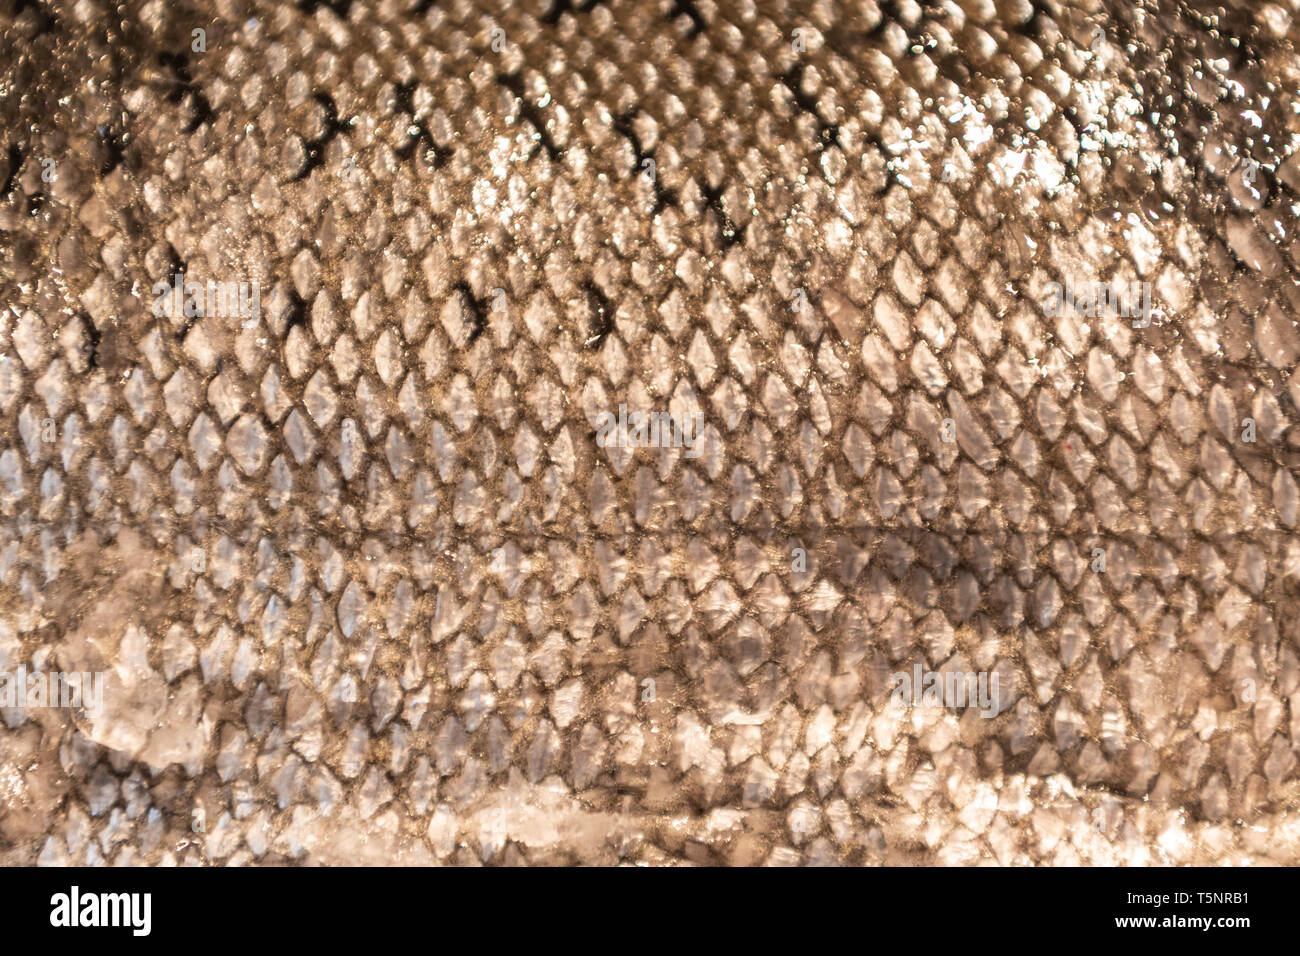 Detail of Scaley Fish Skin Horizontal Background Image Stock Photo